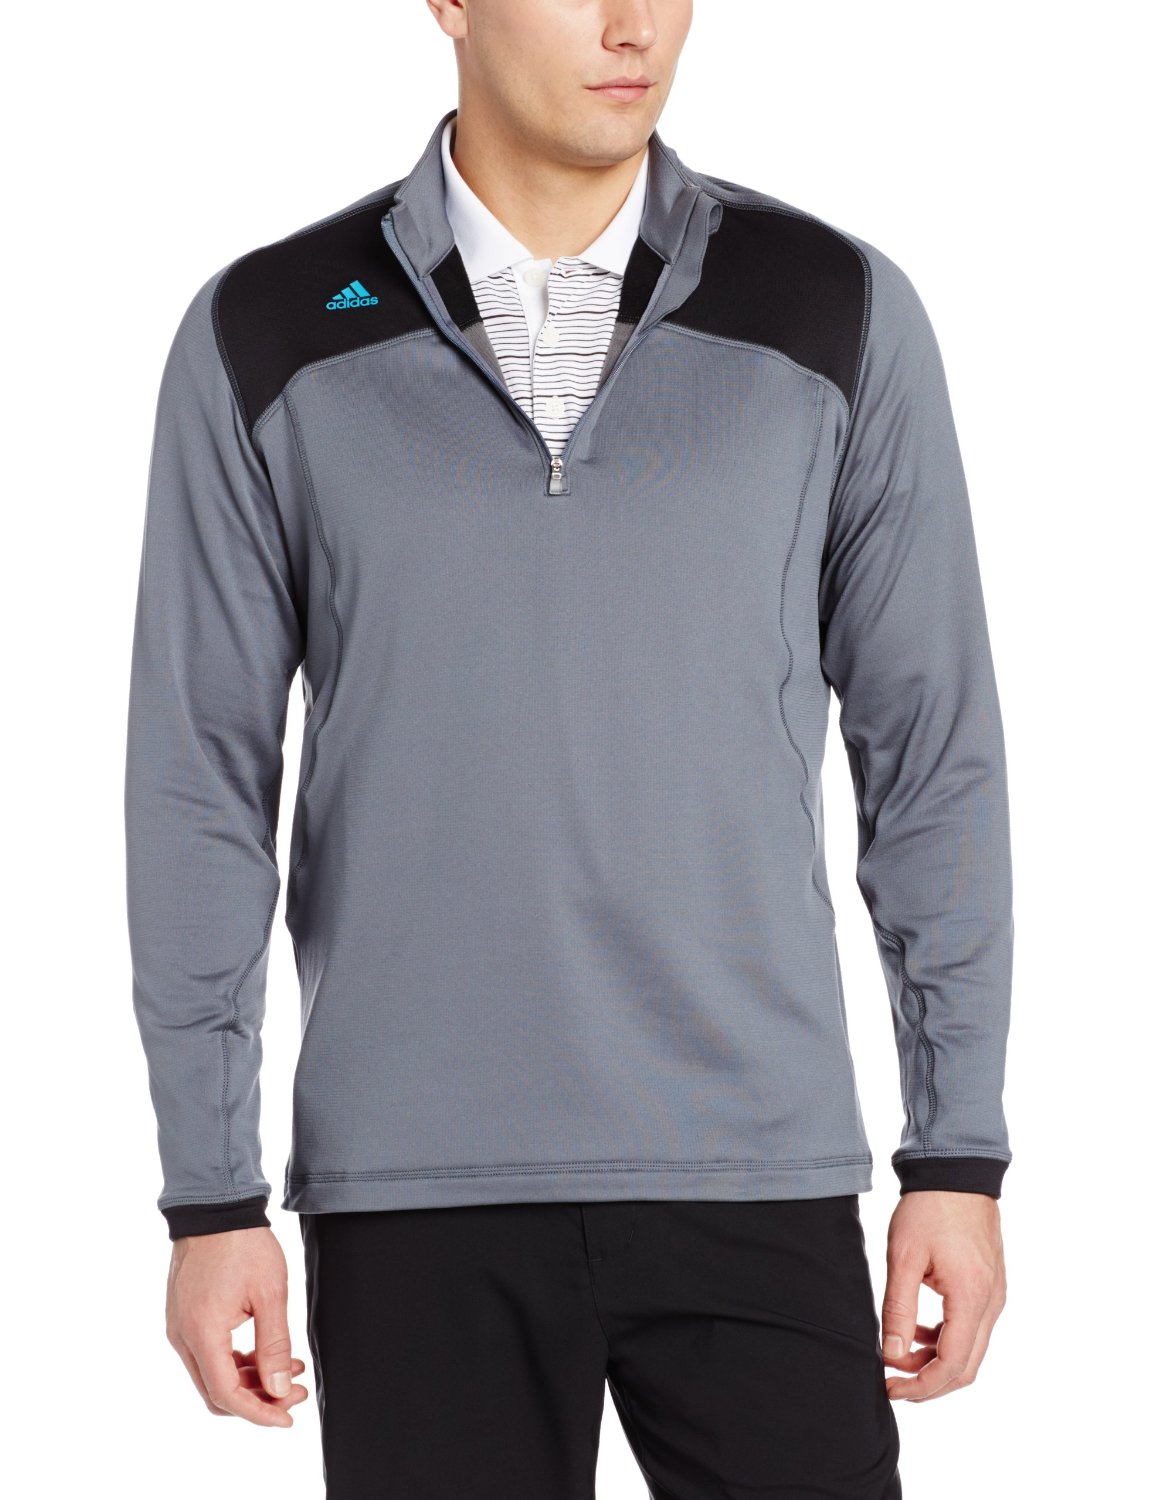 Adidas Climawarm+ Half Zip Golf Pullovers